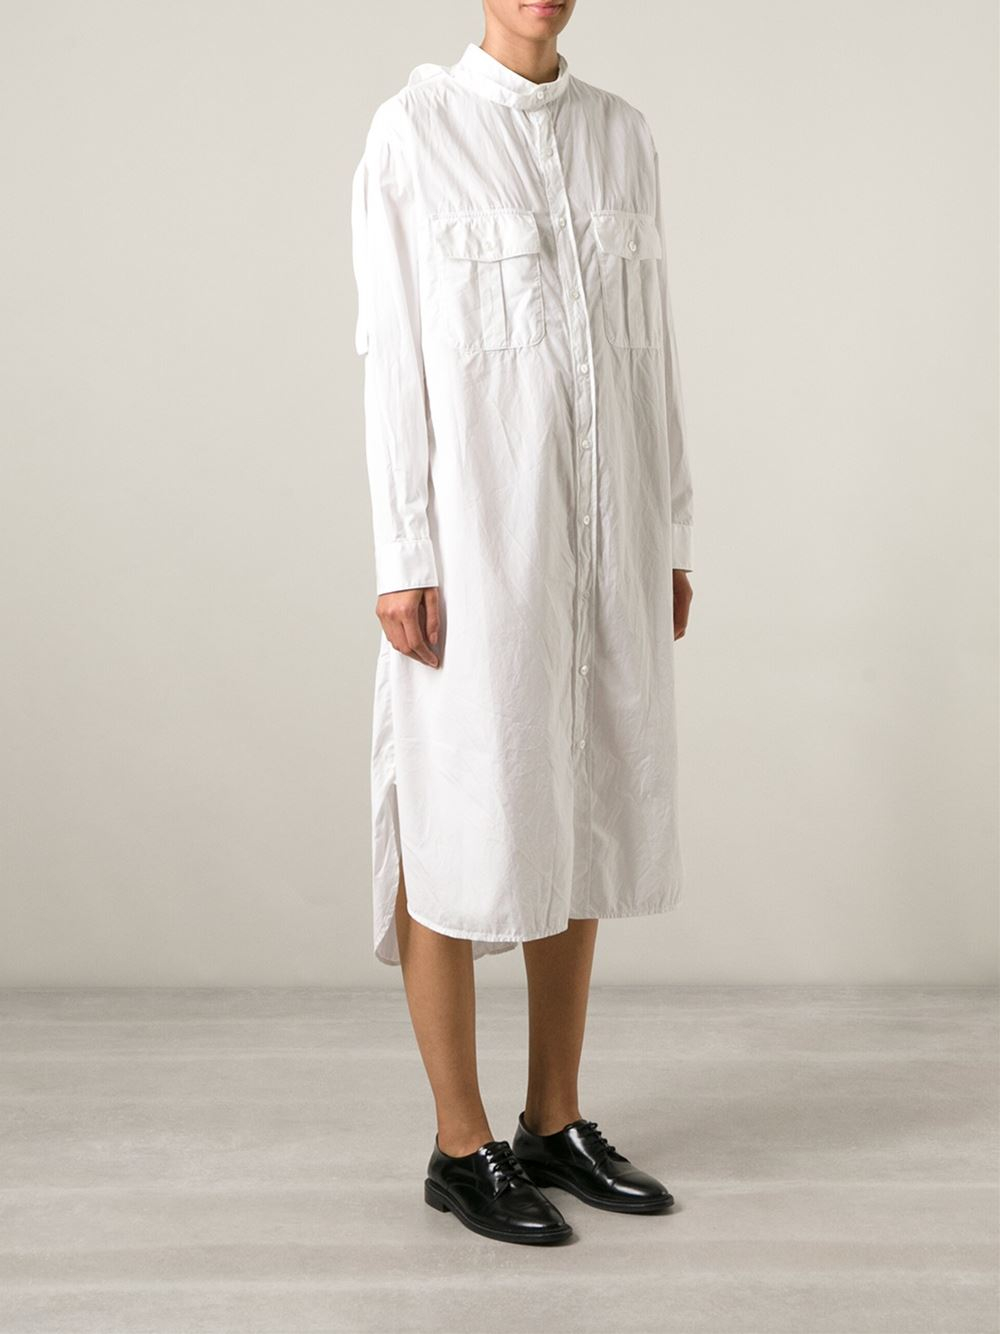 Yohji yamamoto Oversized  Shirt  Dress  in White  Lyst